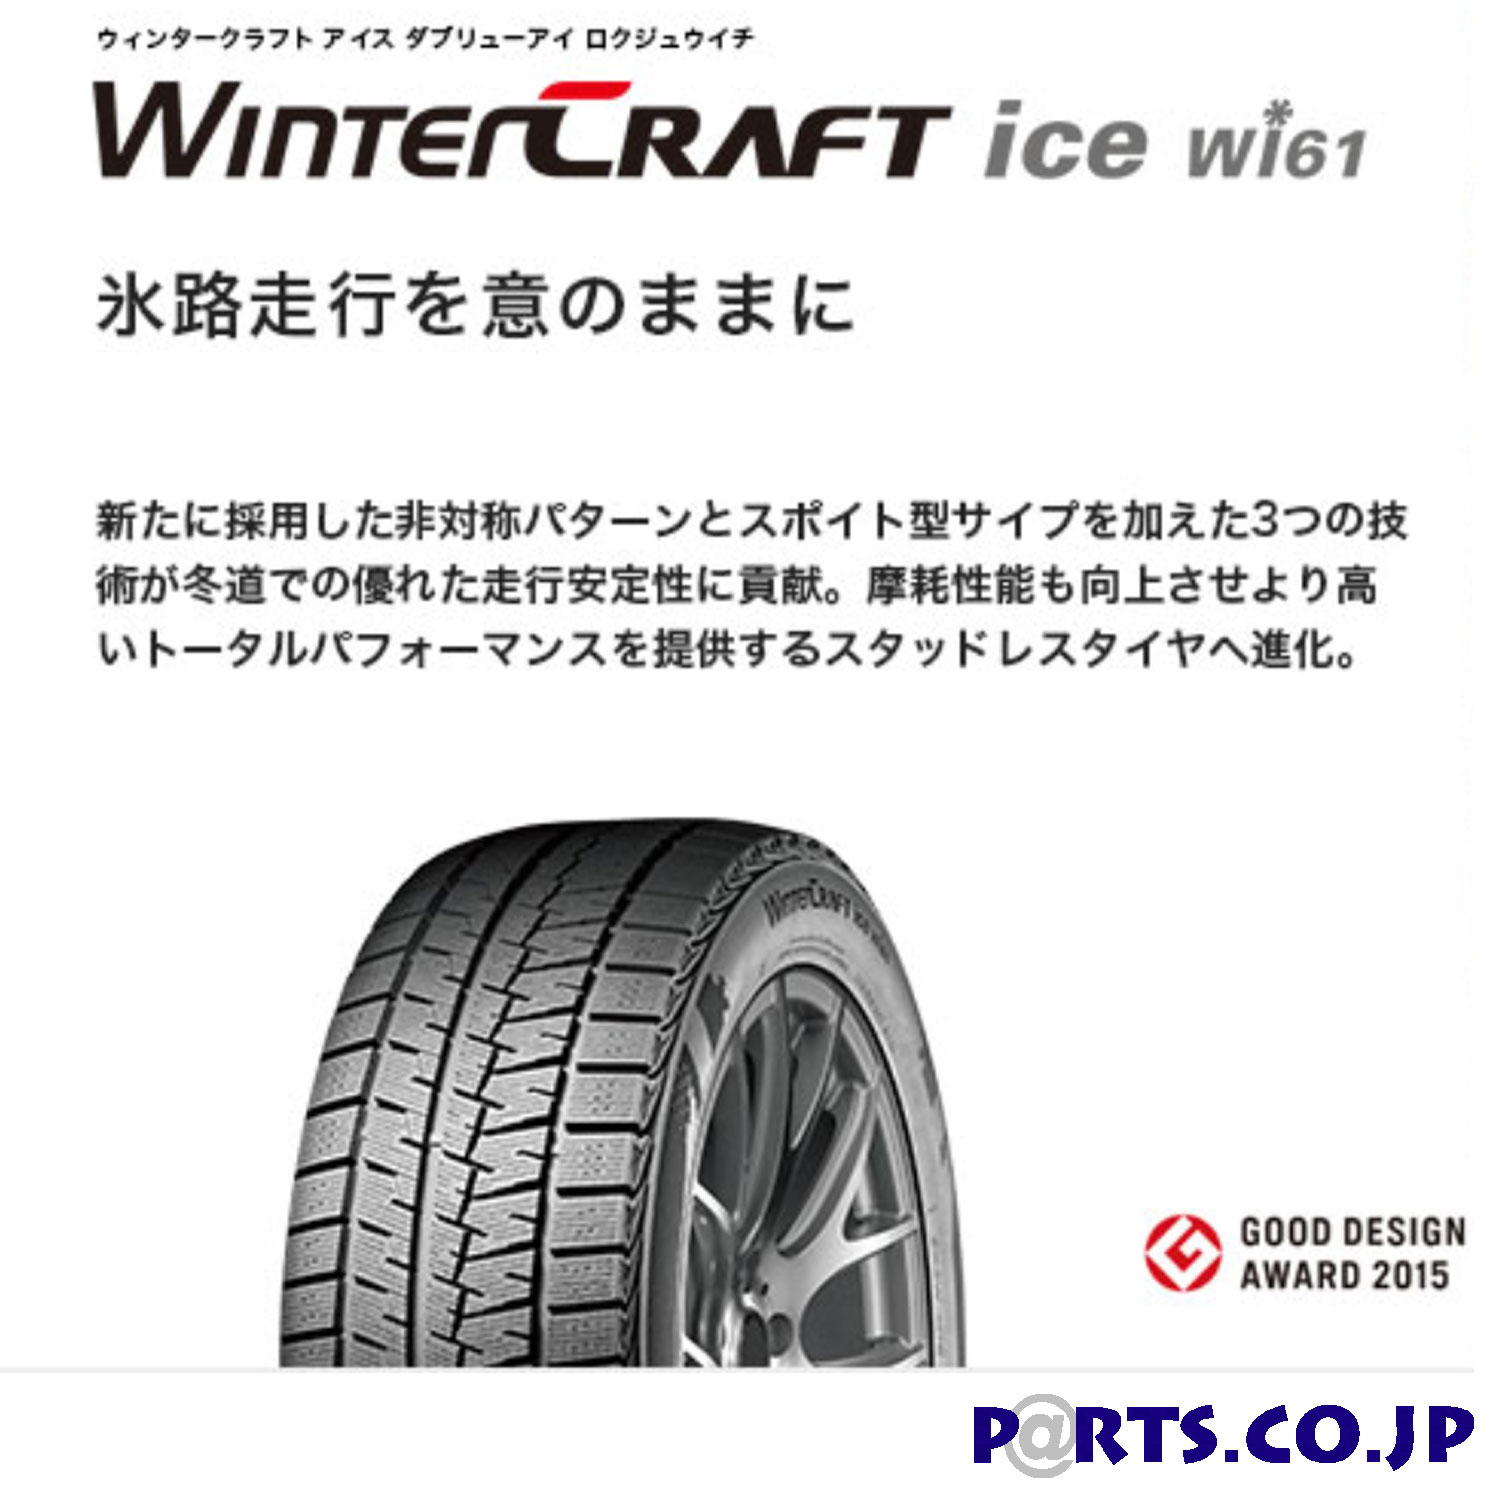 WINTERCRAFT ice Wi61 175/70R14 84R